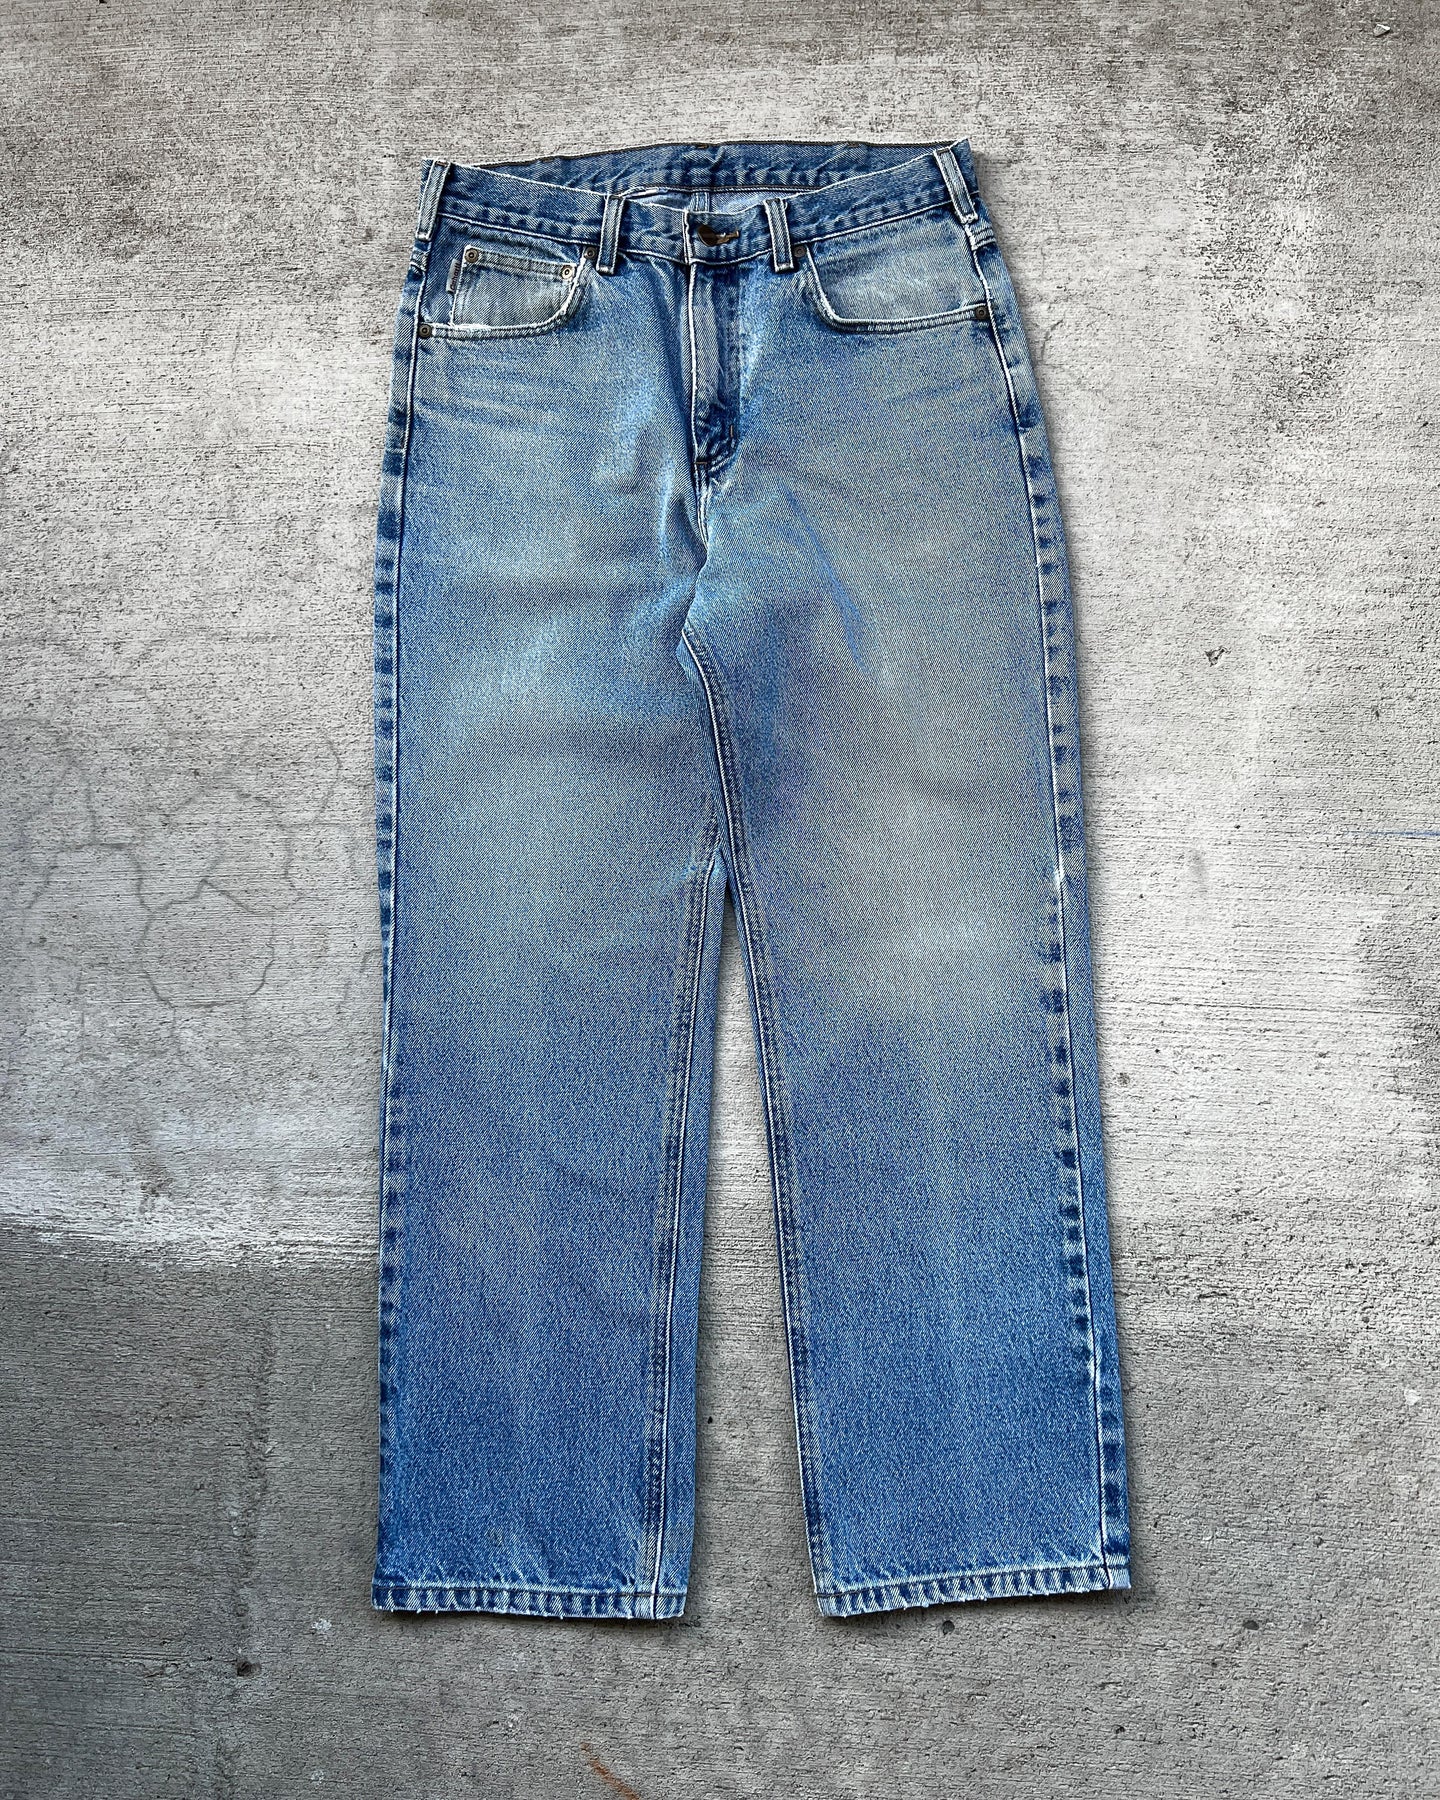 1990s Carhartt Worn In Jeans - Size 32 x 30